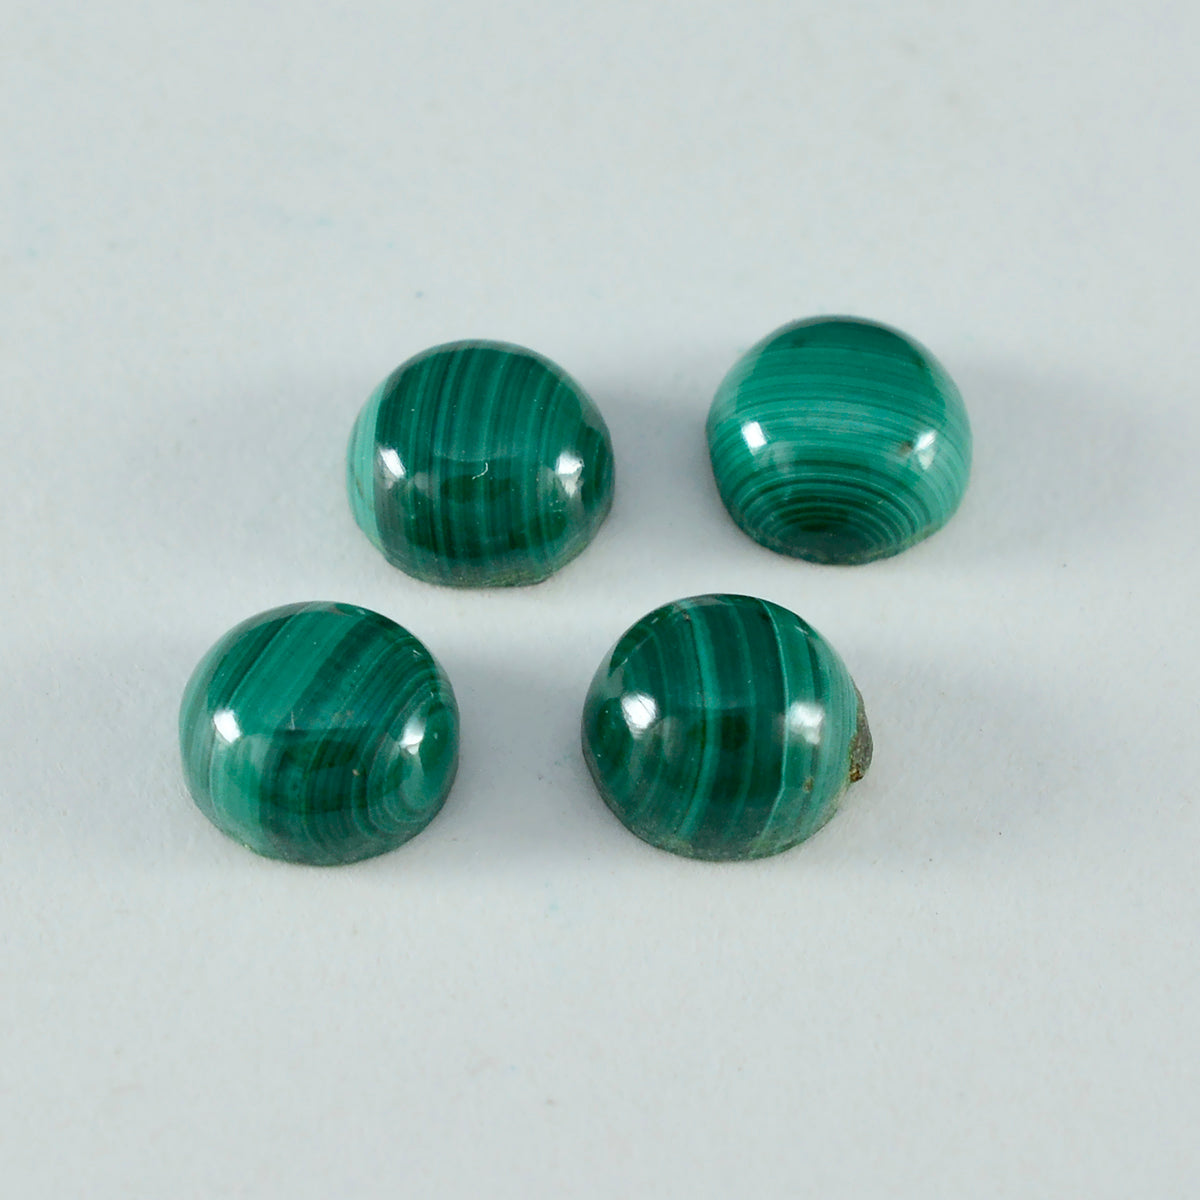 Riyogems 1PC Green Malachite Cabochon 7x7 mm Round Shape pretty Quality Loose Gems